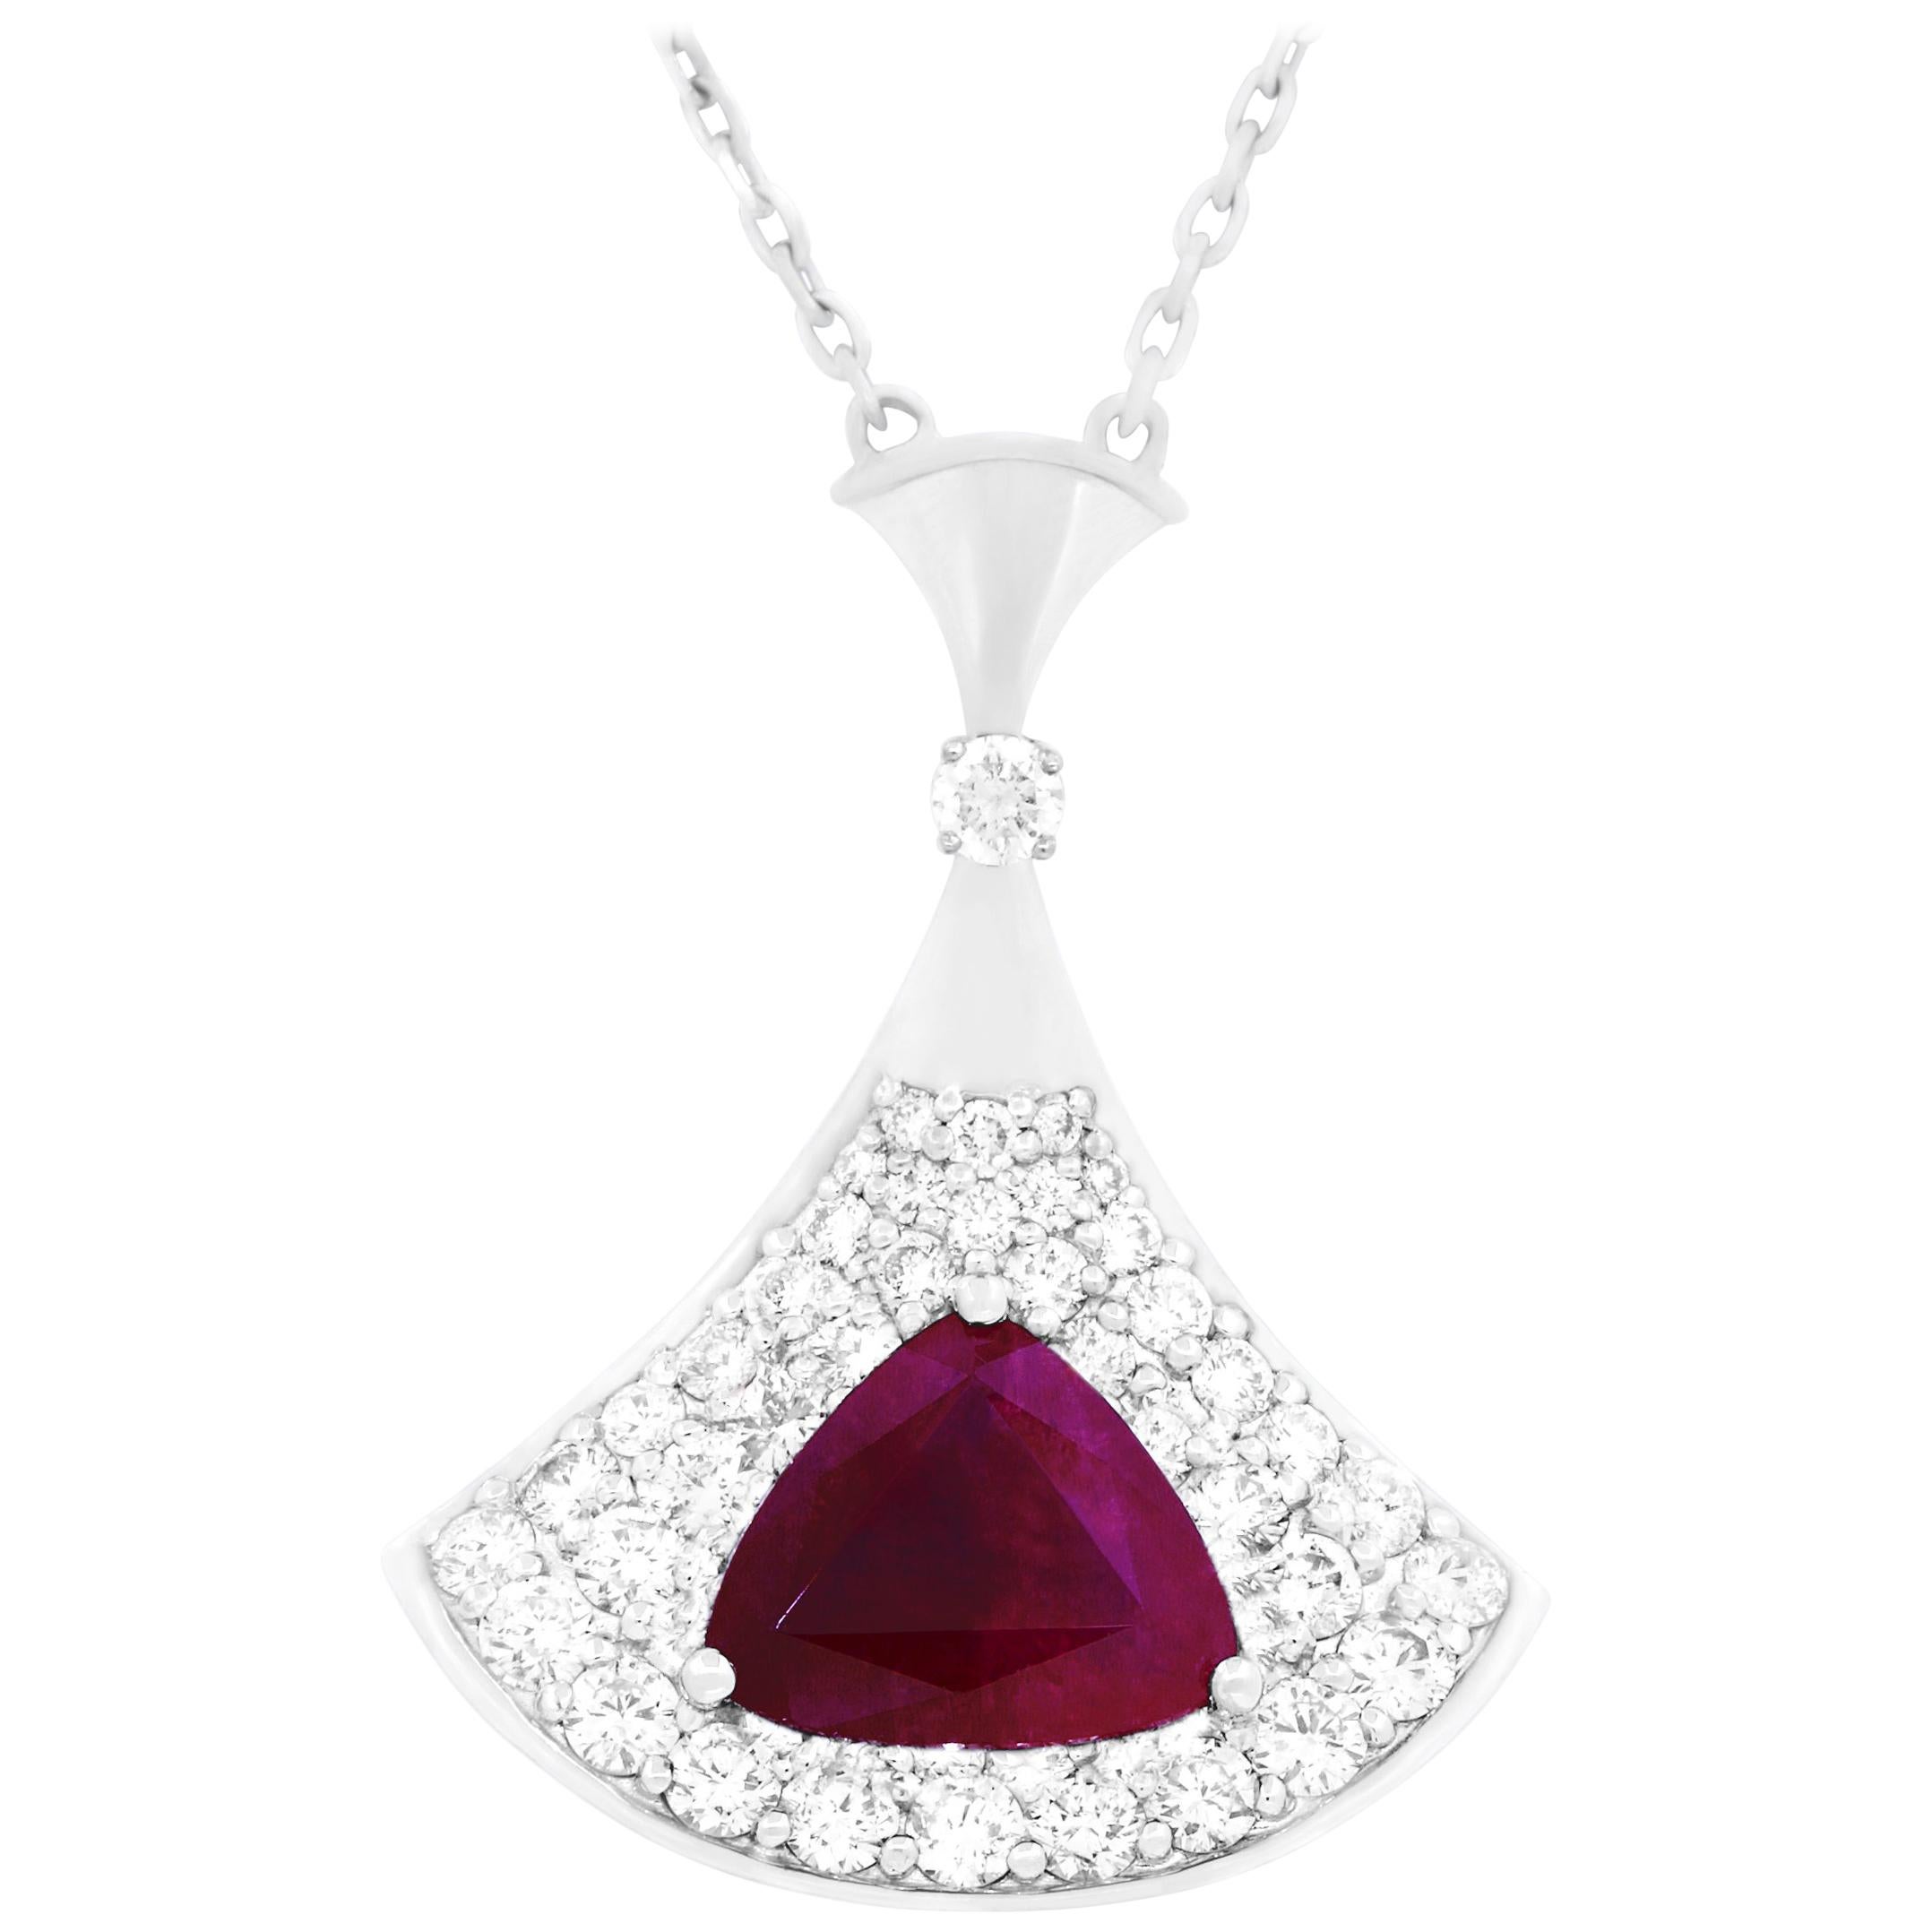 3.28 Carat Trillion Ruby and Diamond Necklace